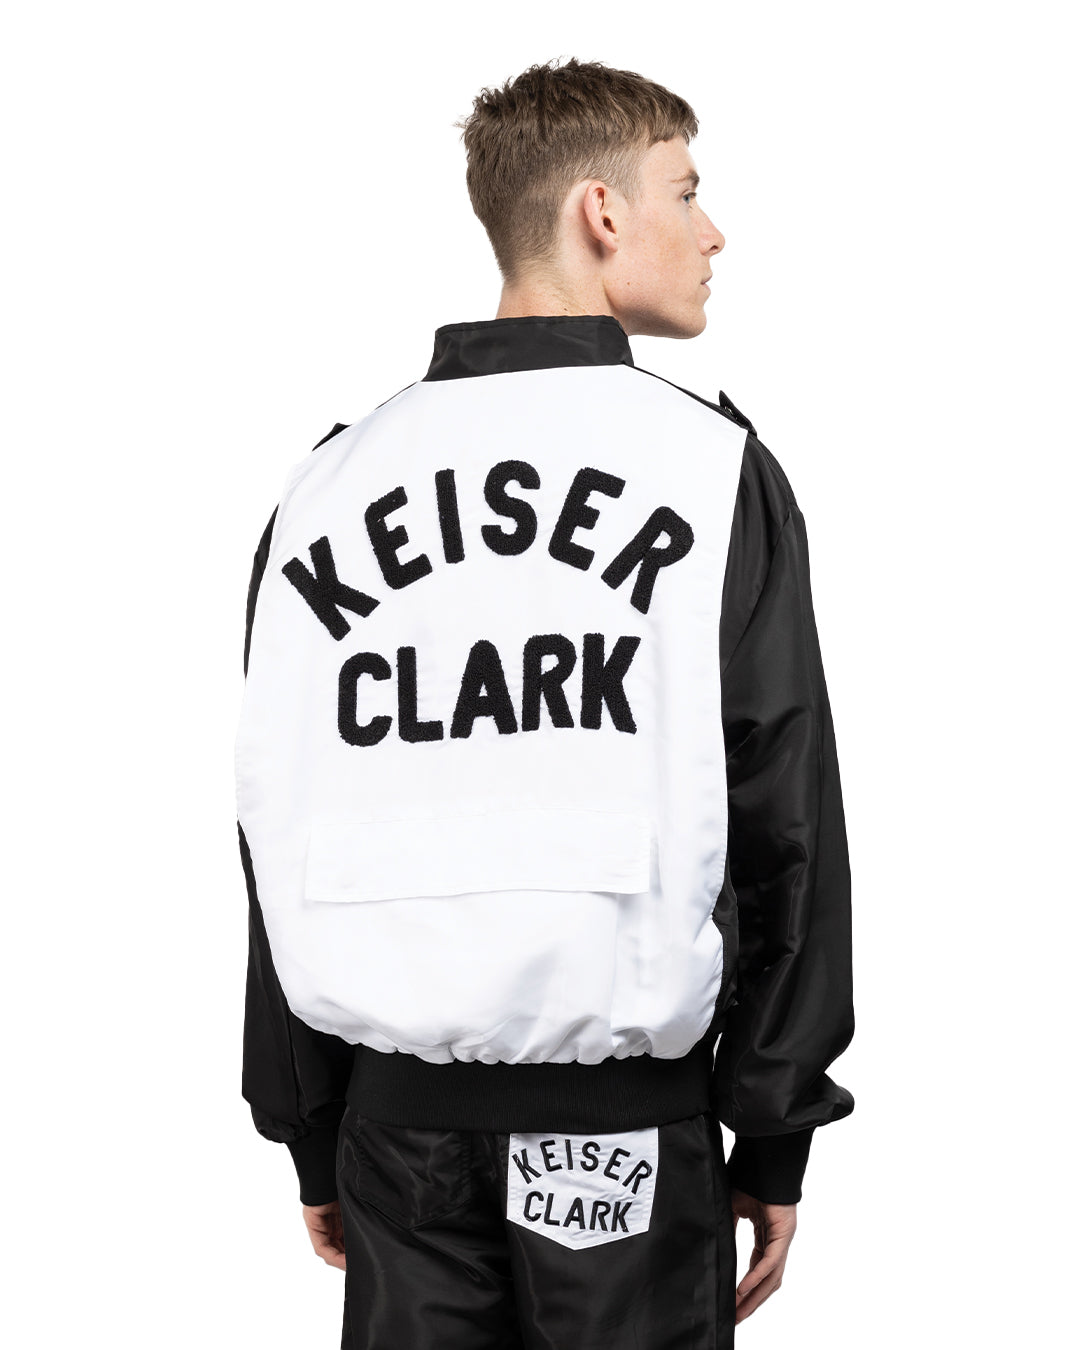 Keiser Clark 8 Ball Club Jacket Black